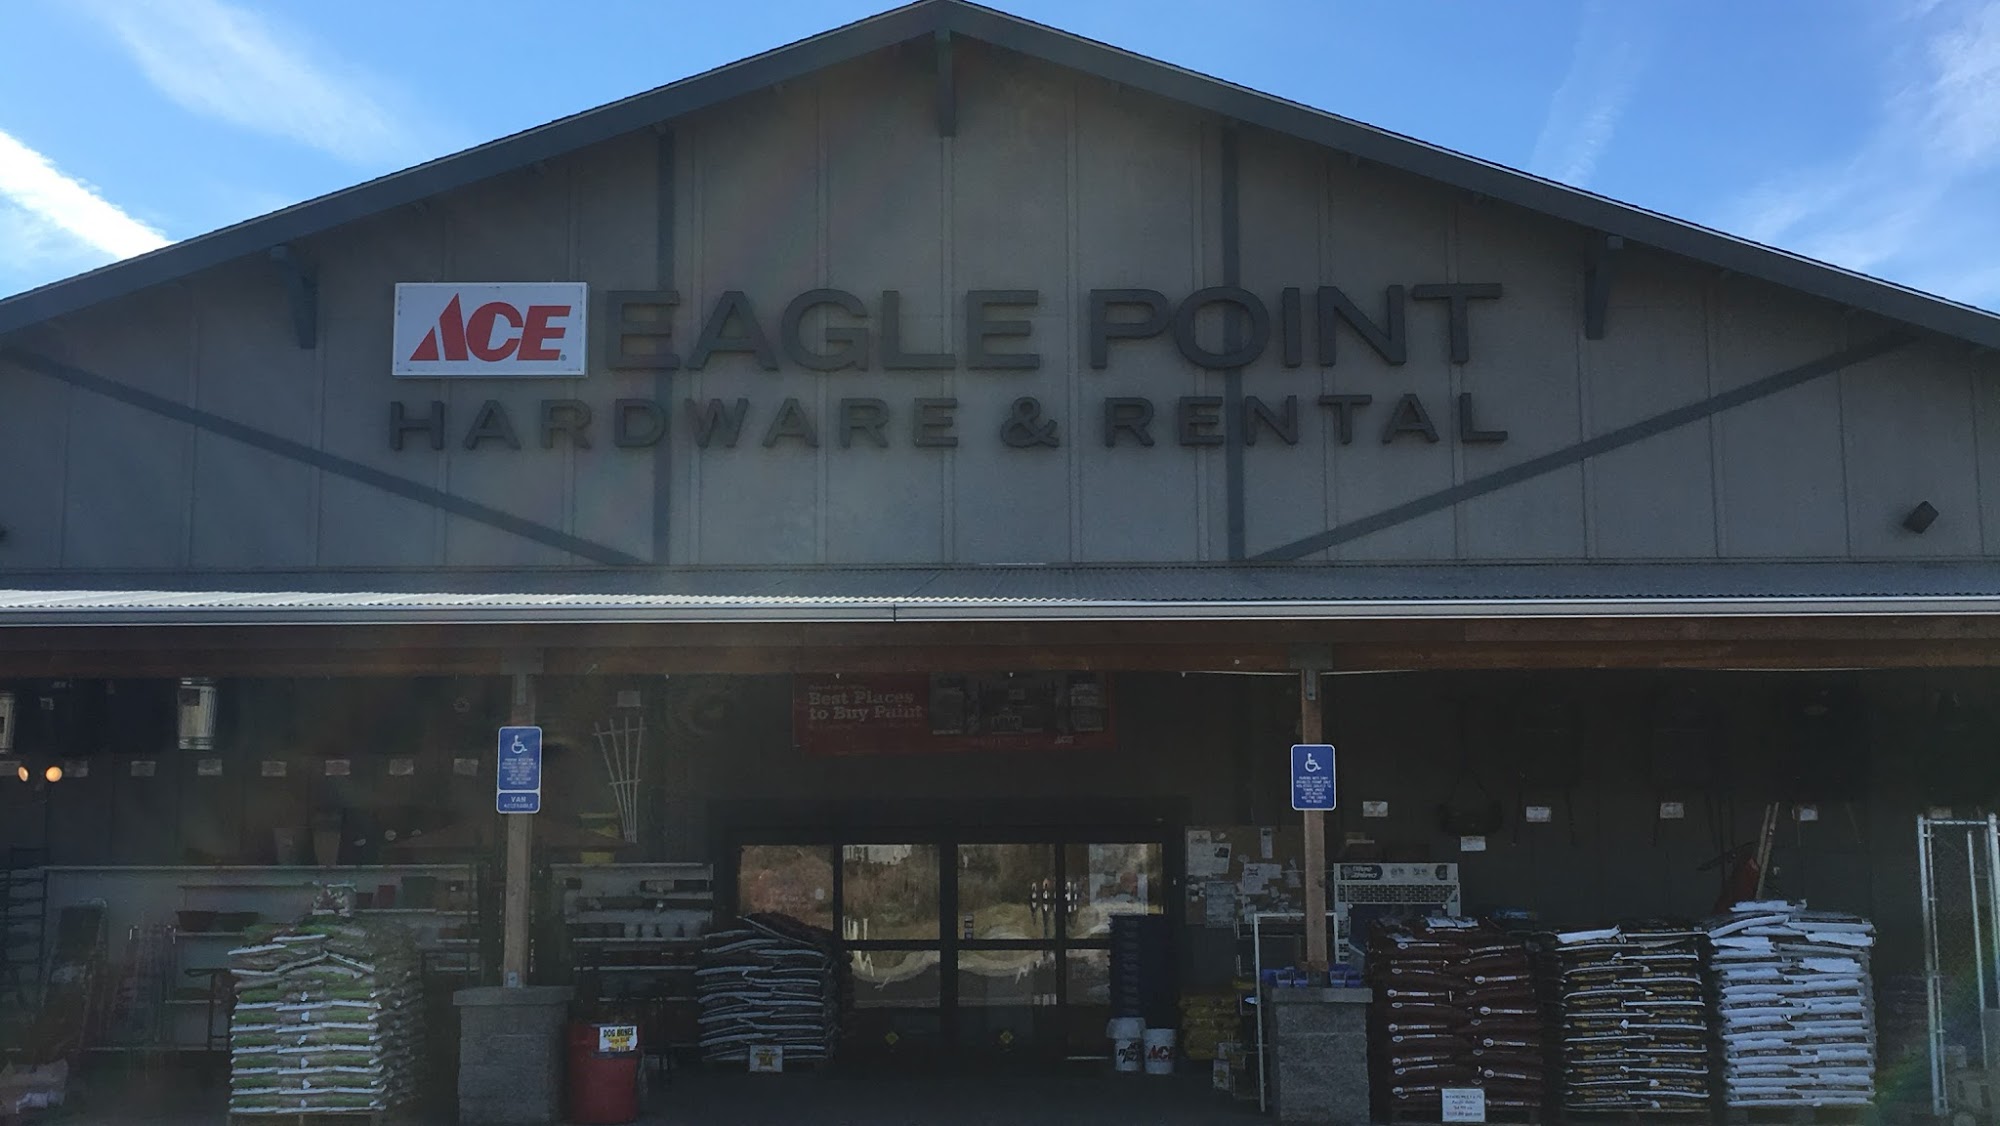 Ace Eagle Point Hardware & Rental